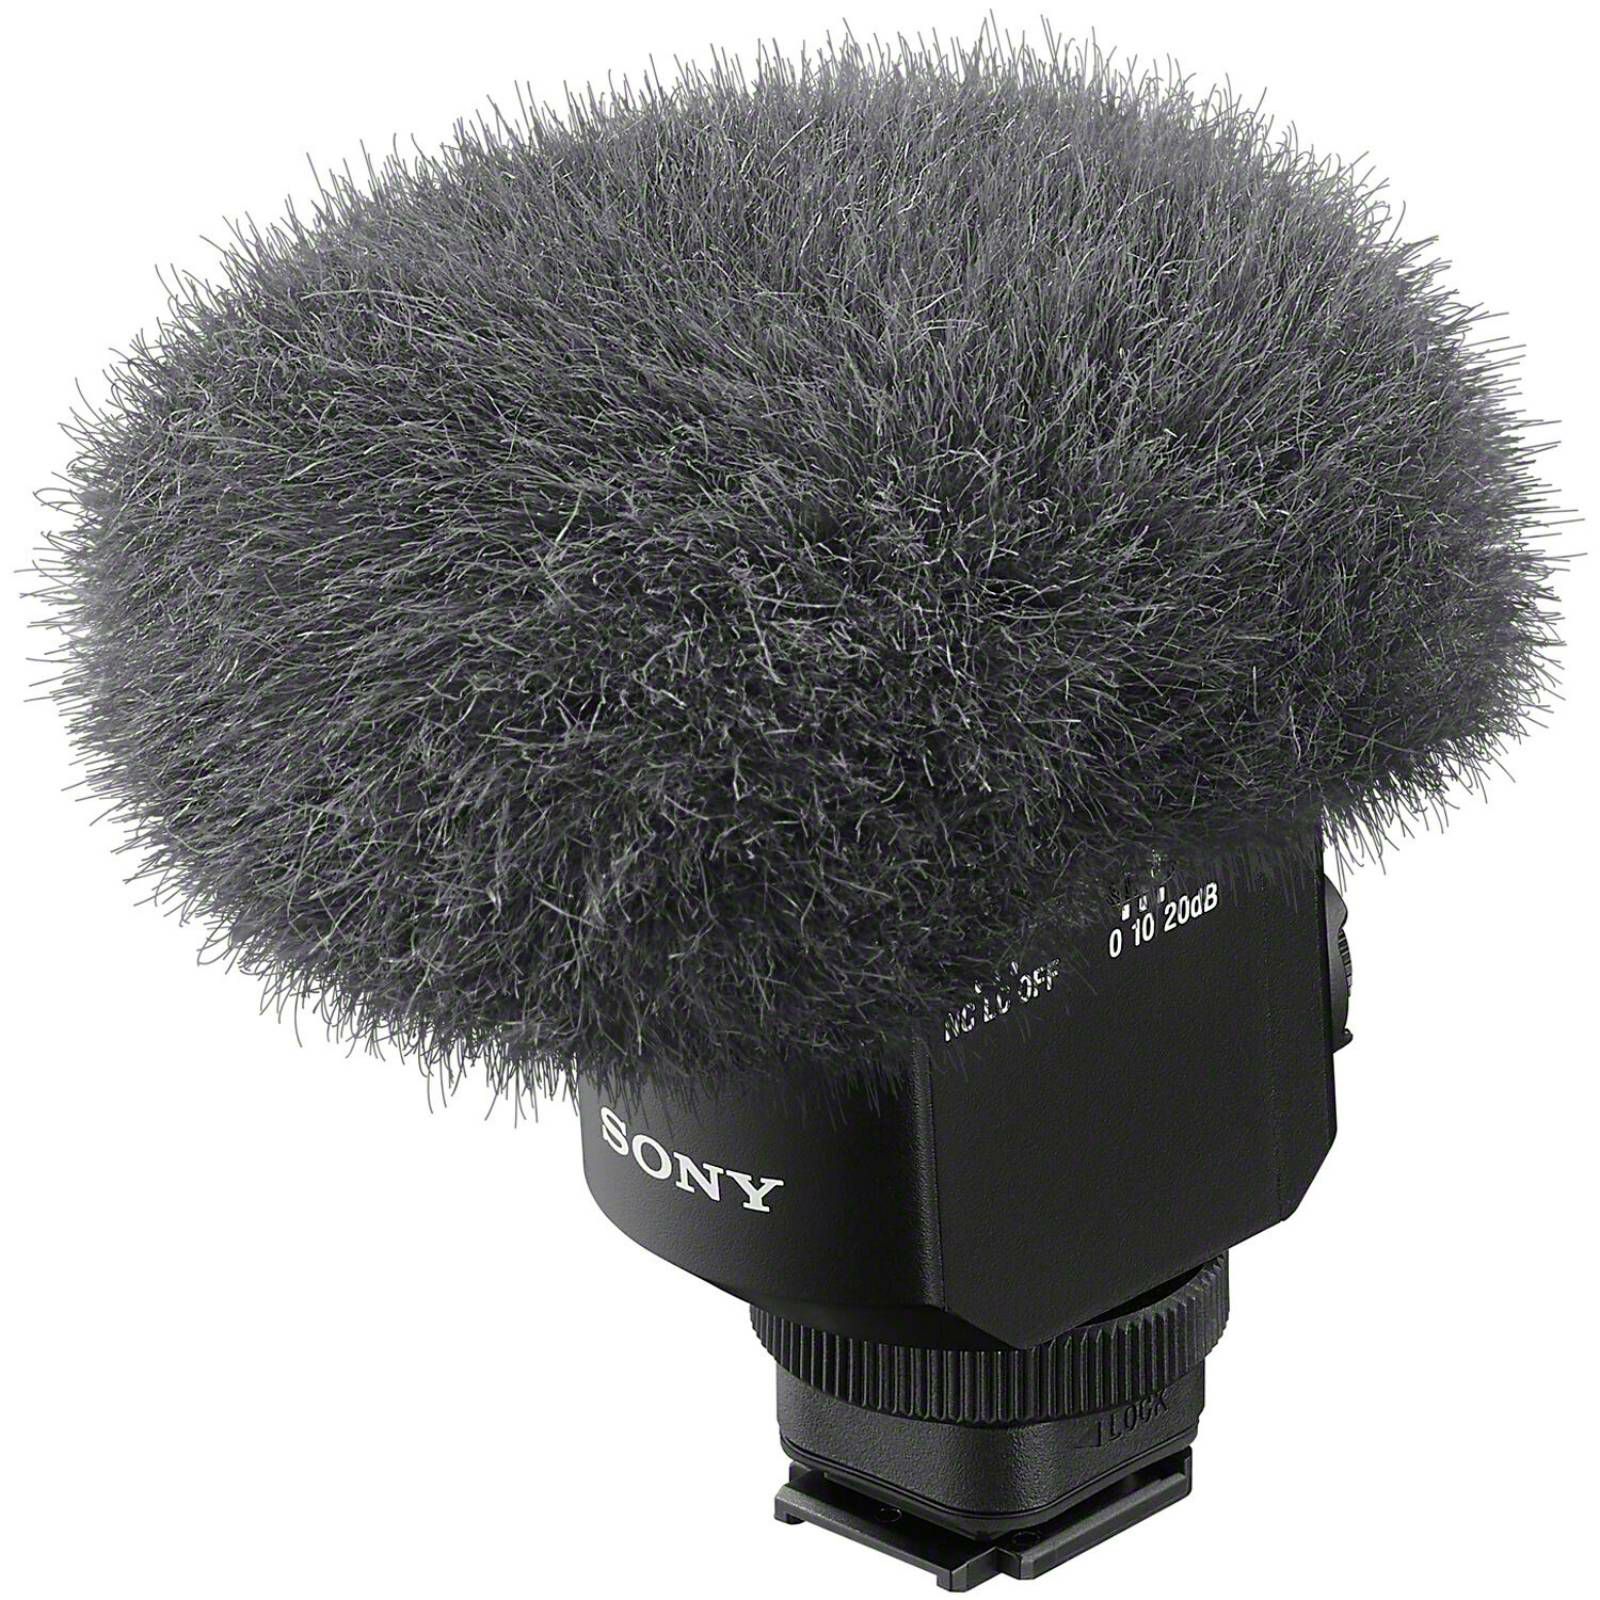 Sony ECM-M1 mikrofon za fotoaparat